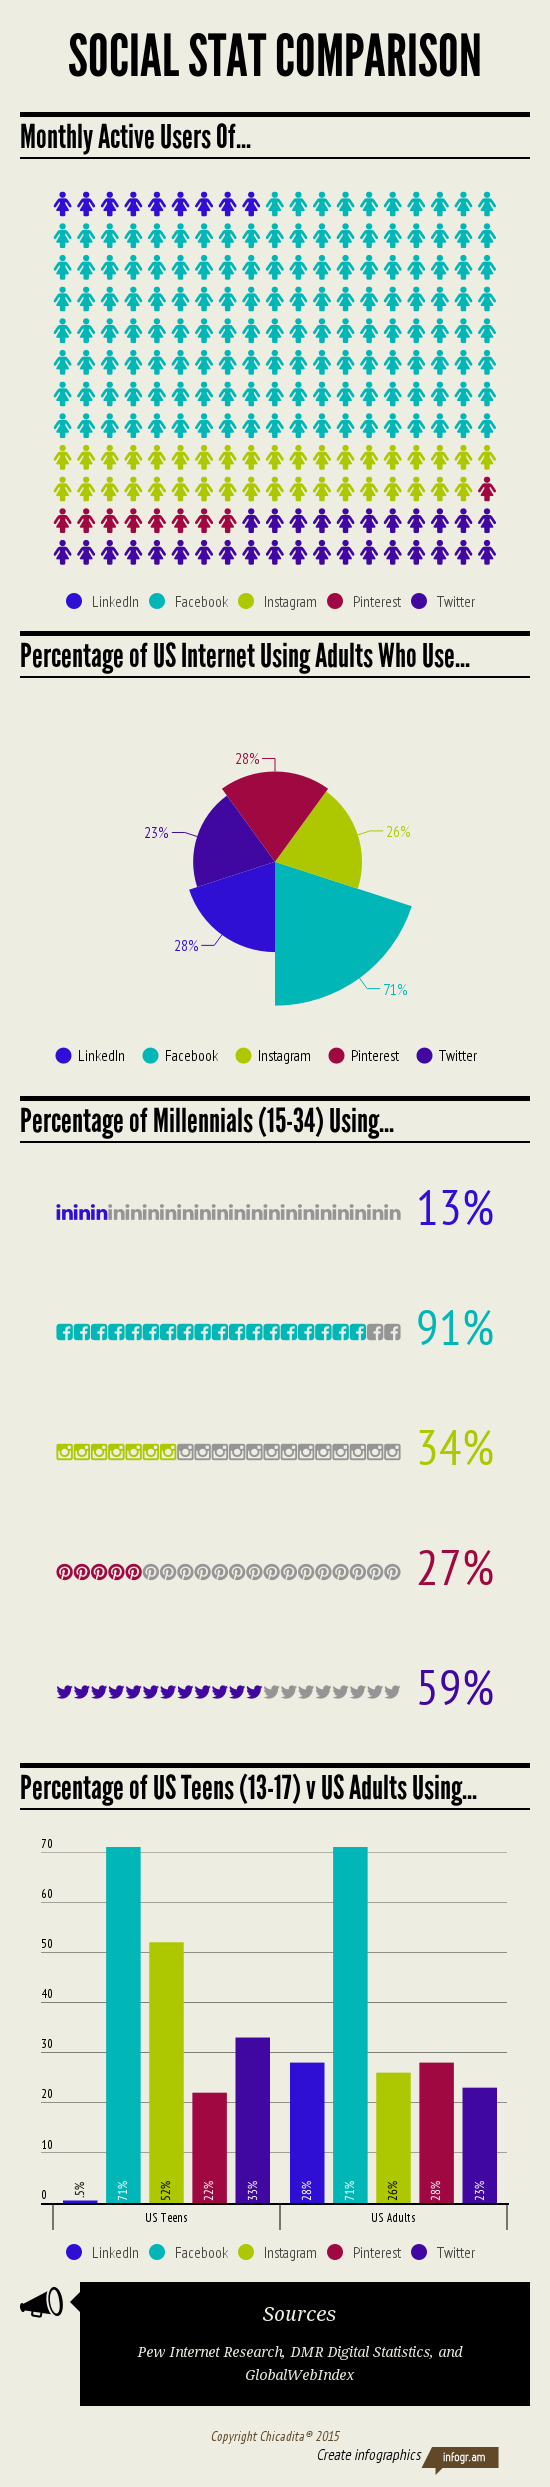 2015 Social Media Statistics Infographic